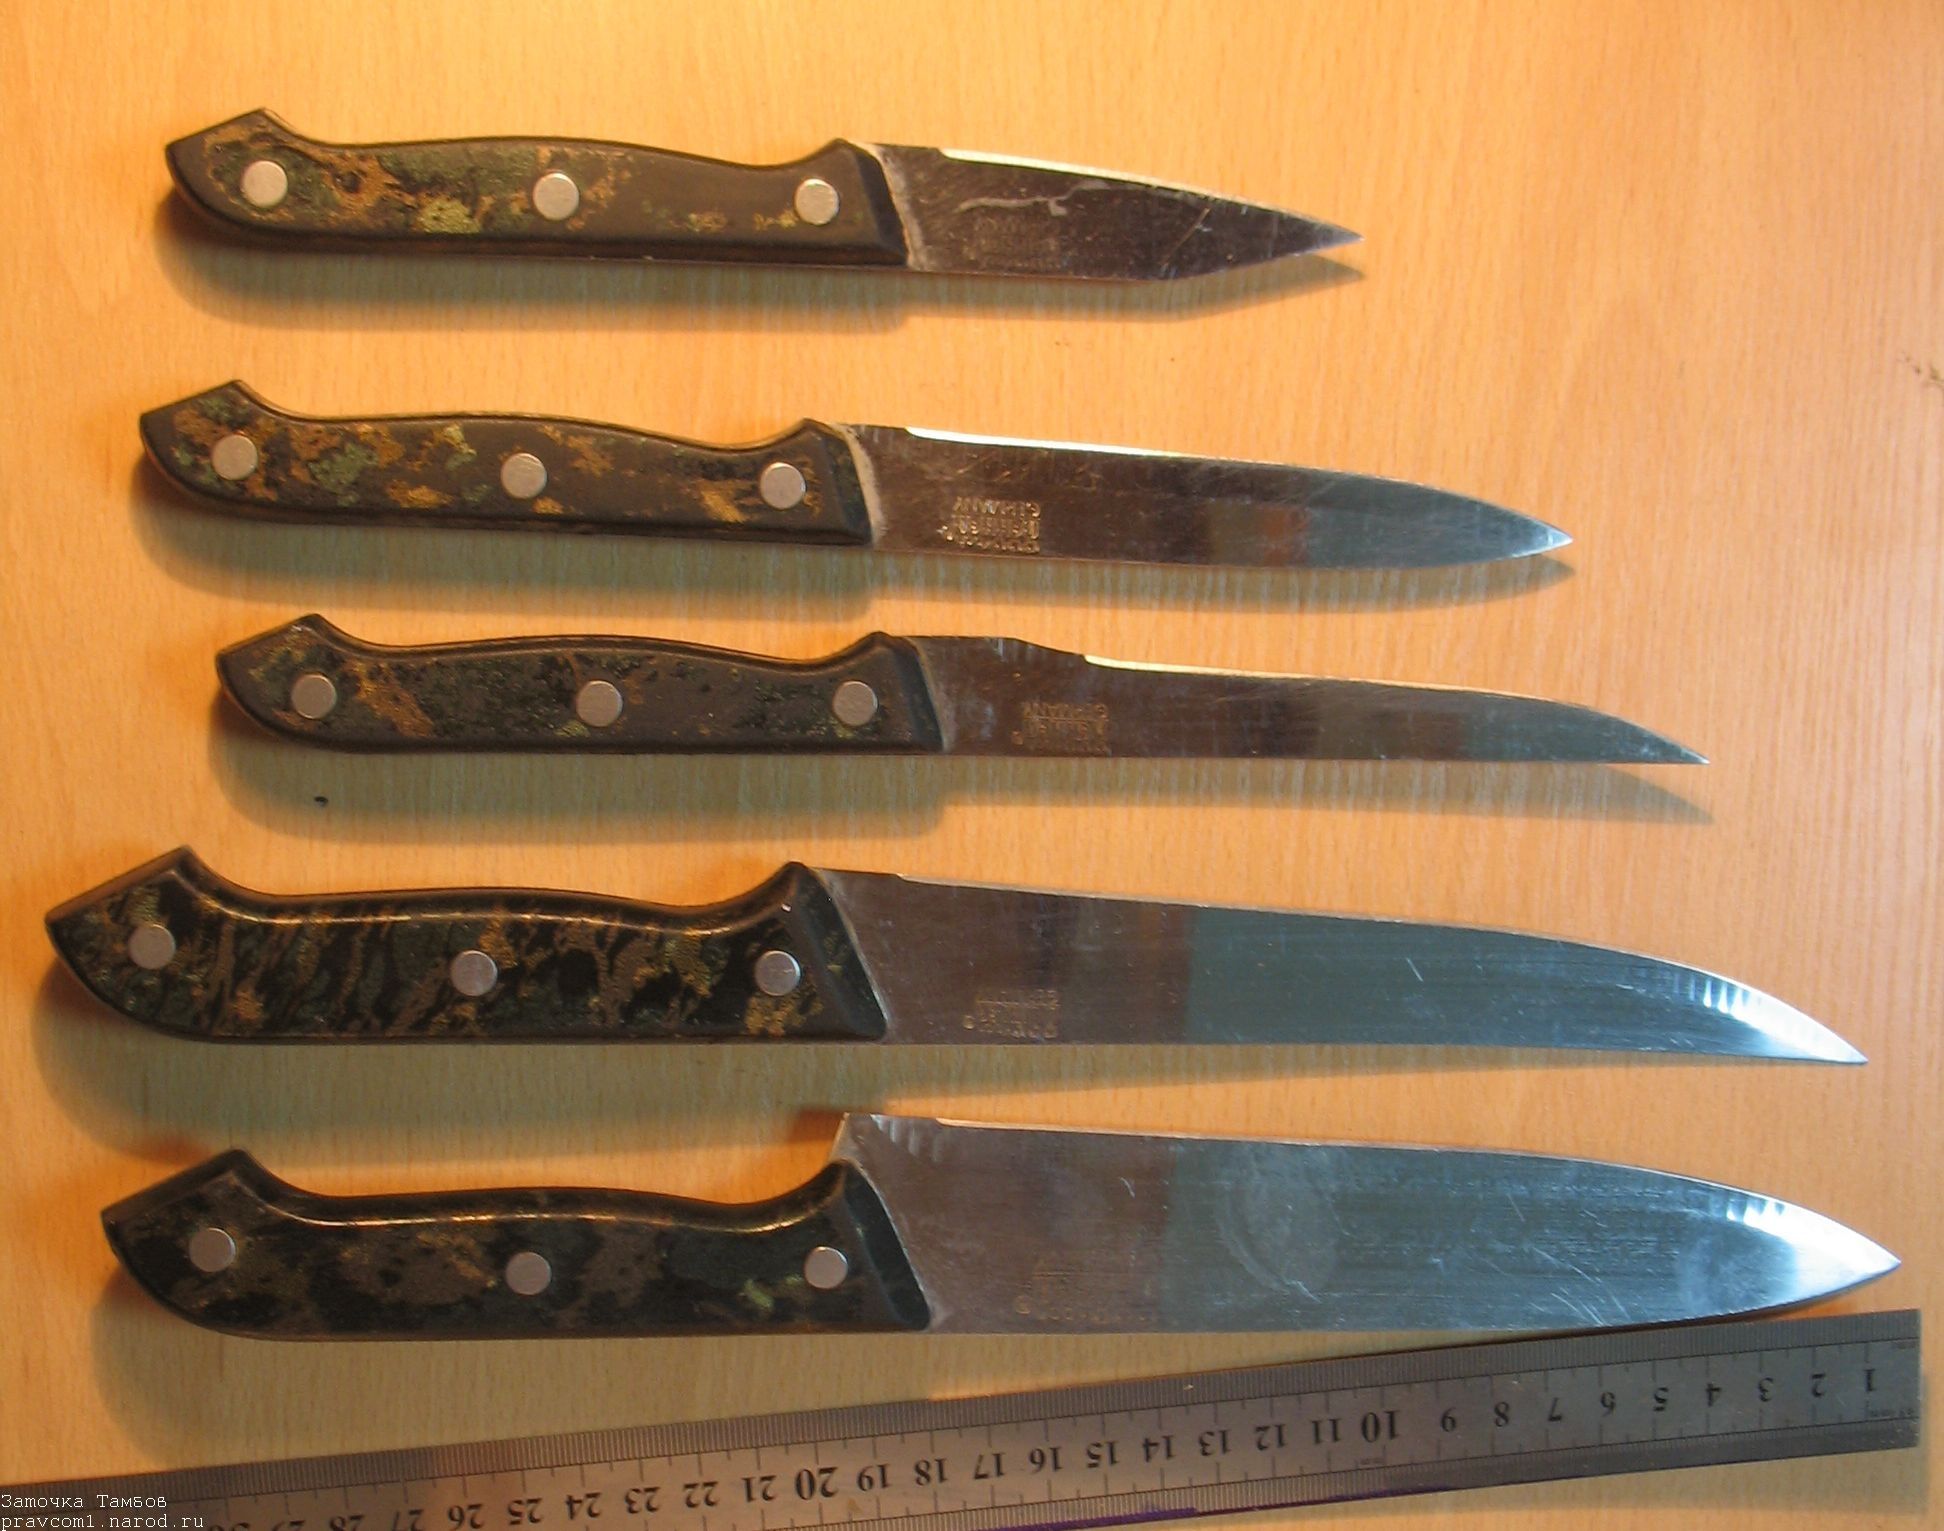 Немецкие ножи Koch Bekker